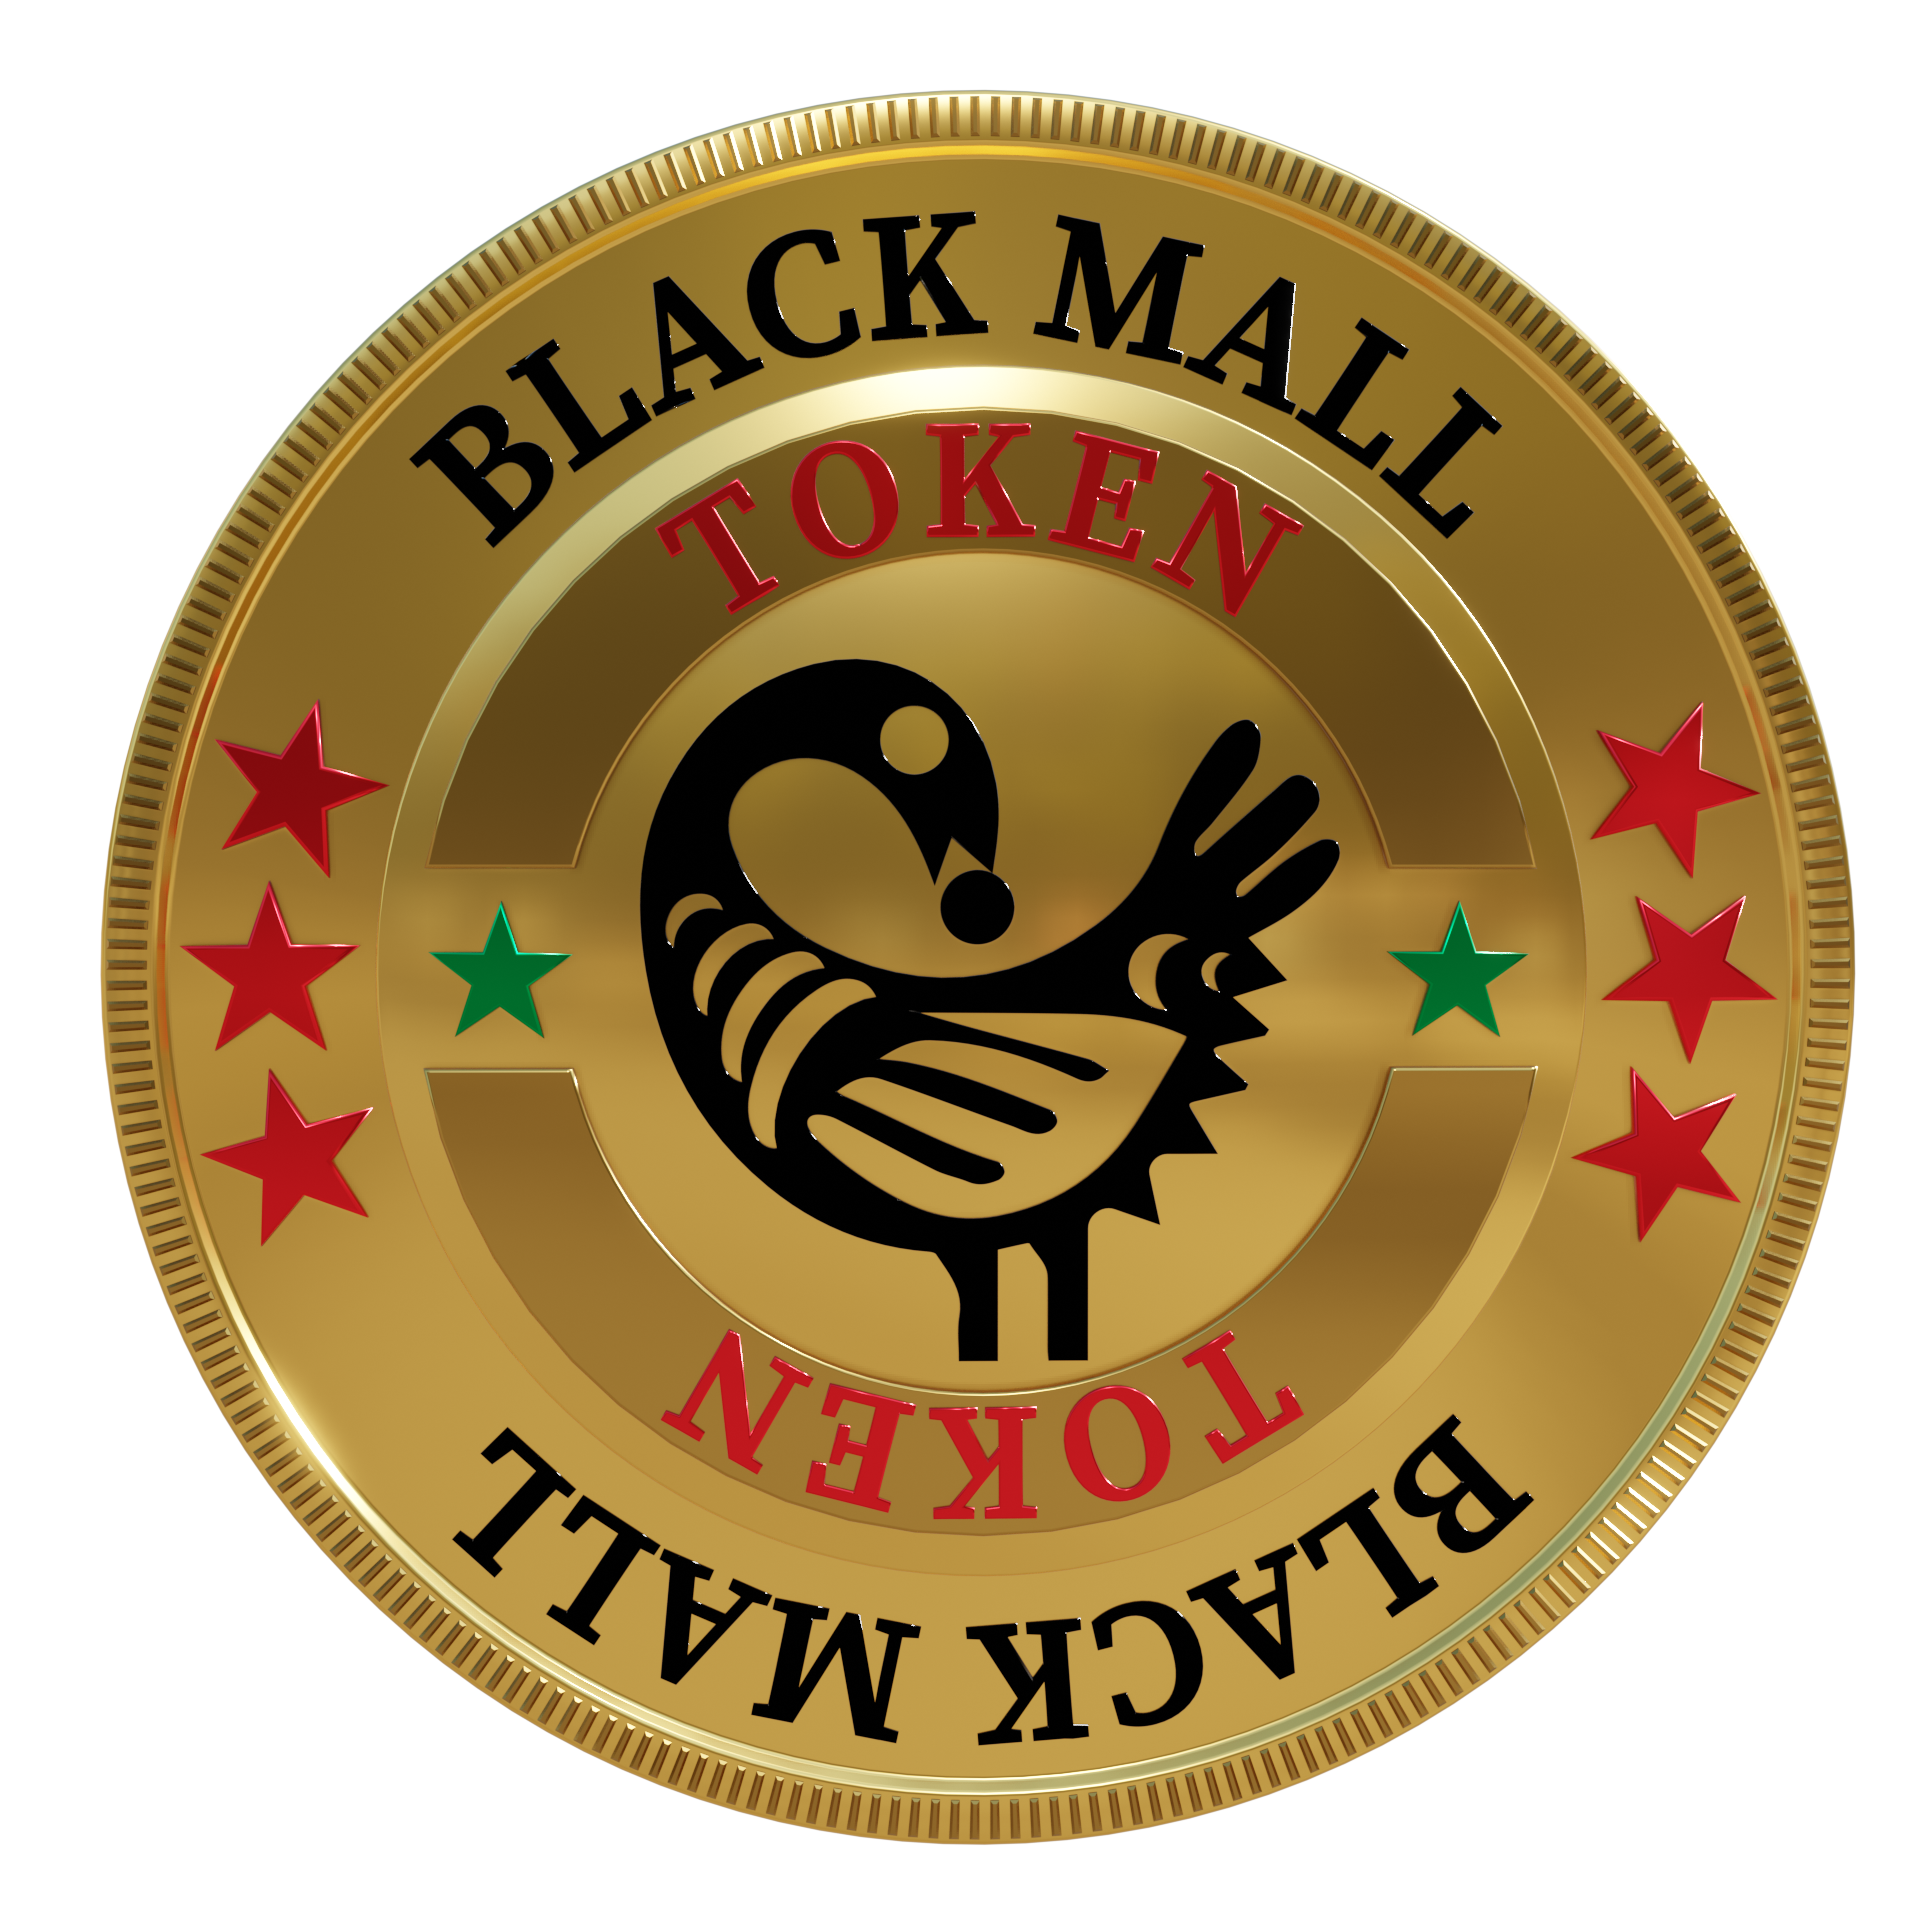 Black Mall of America, Black Mall Tokens, Black Mall of America Superstore